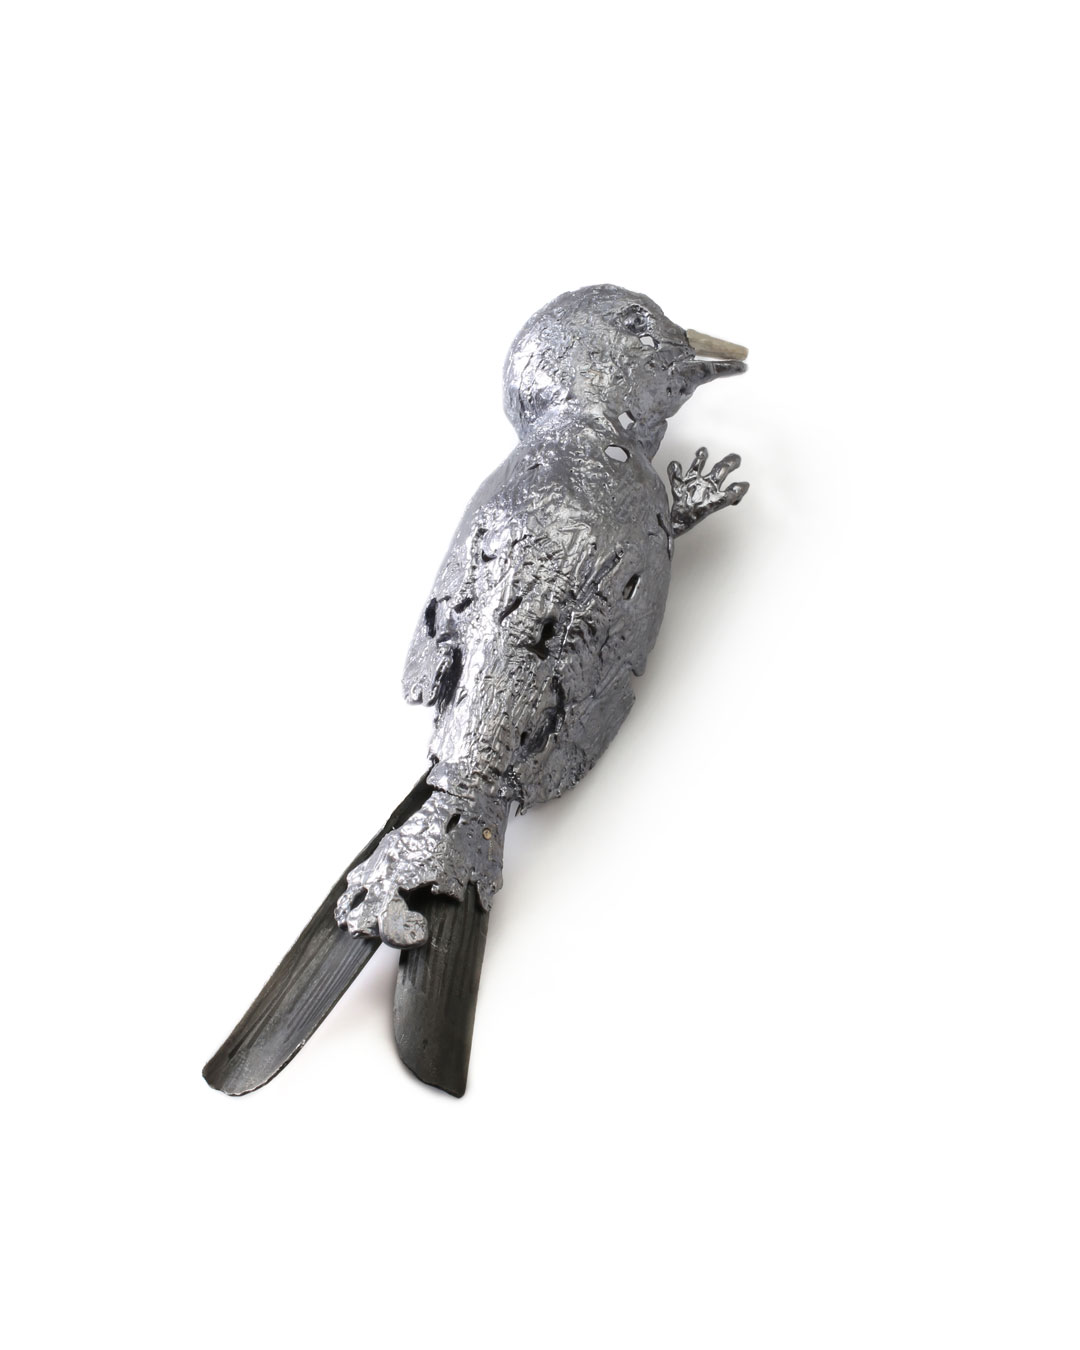 Juliane Brandes, untitled, 2013, brooch; aluminum-manganese, silver, copper, 150 x 40 x 25 mm, €1820